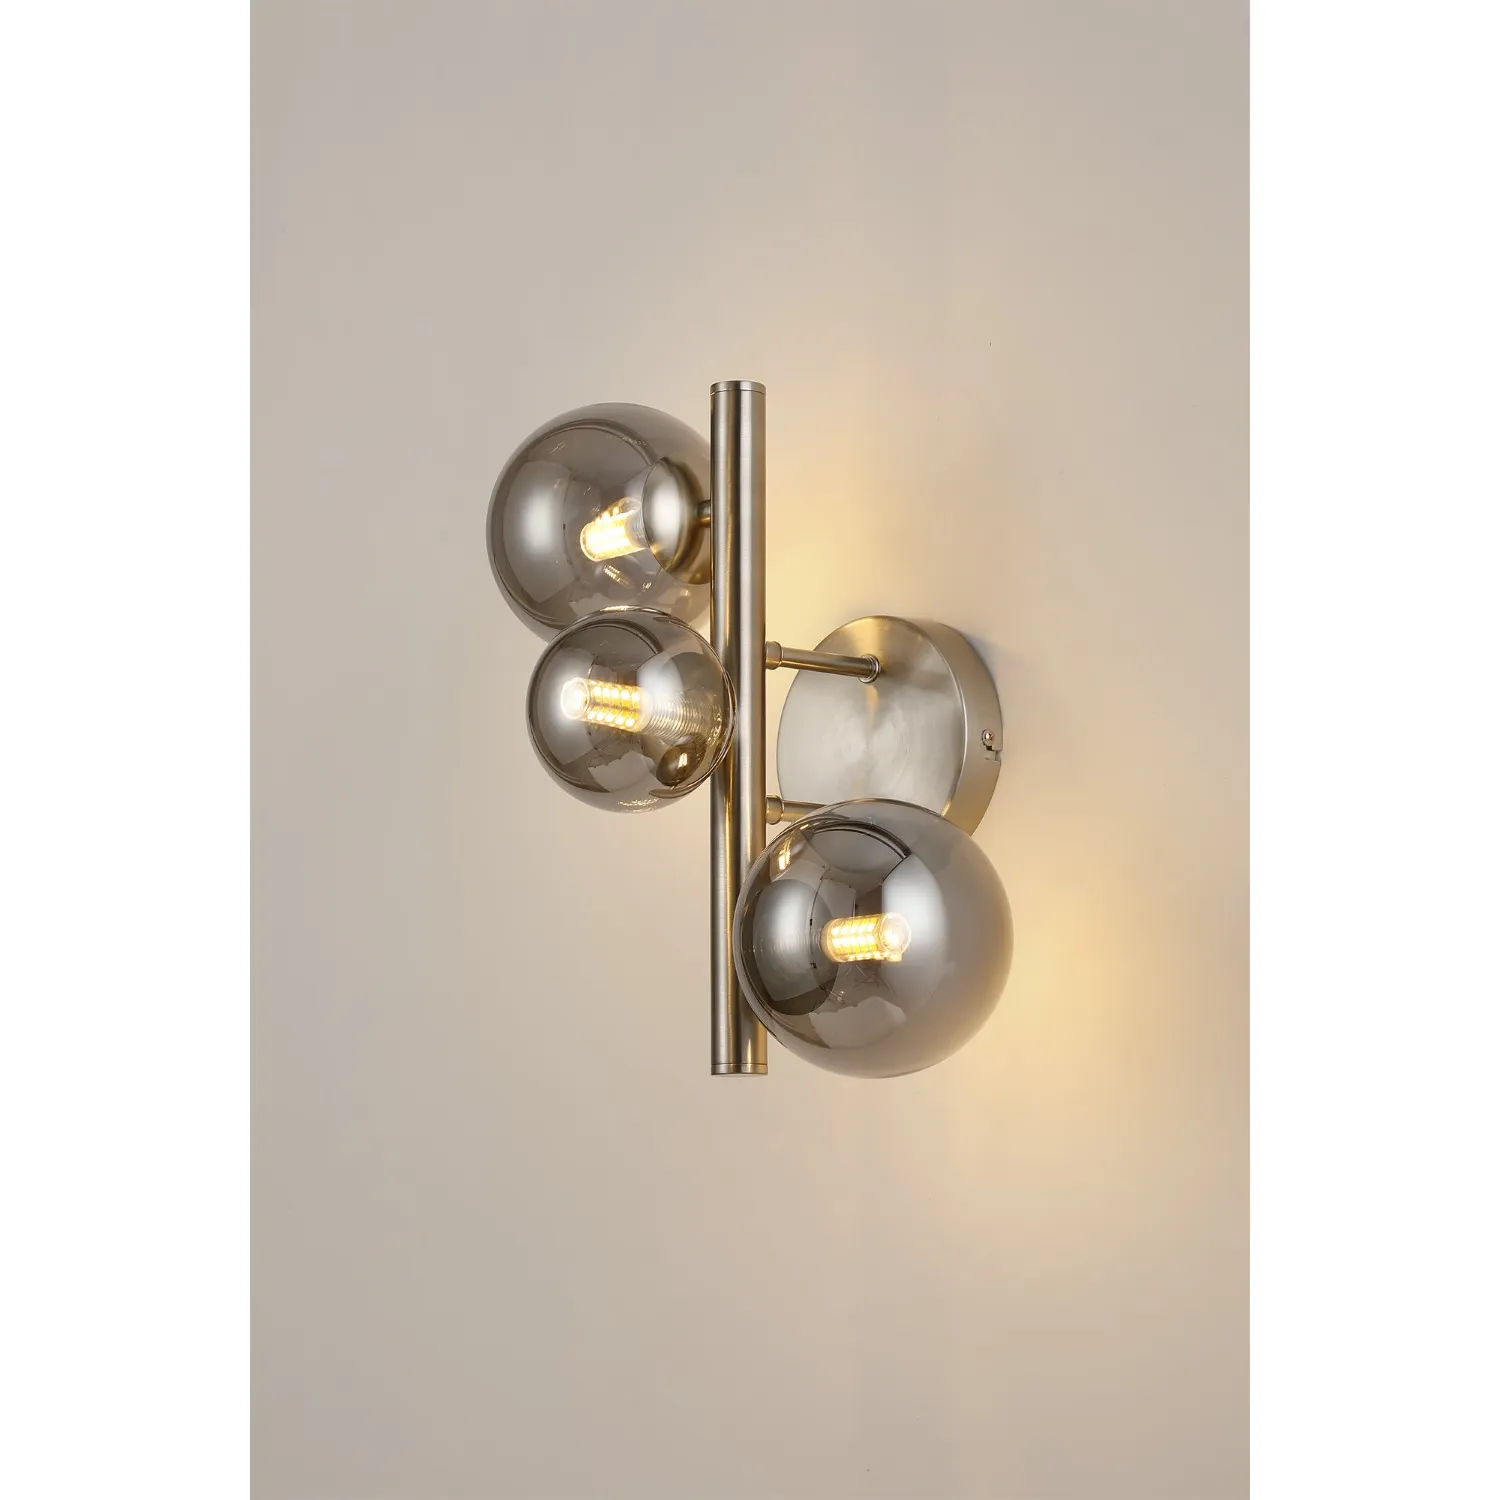 Tenterden Wall Lamp, 3 x G9, Satin Nickel, Smoke Plated Glass